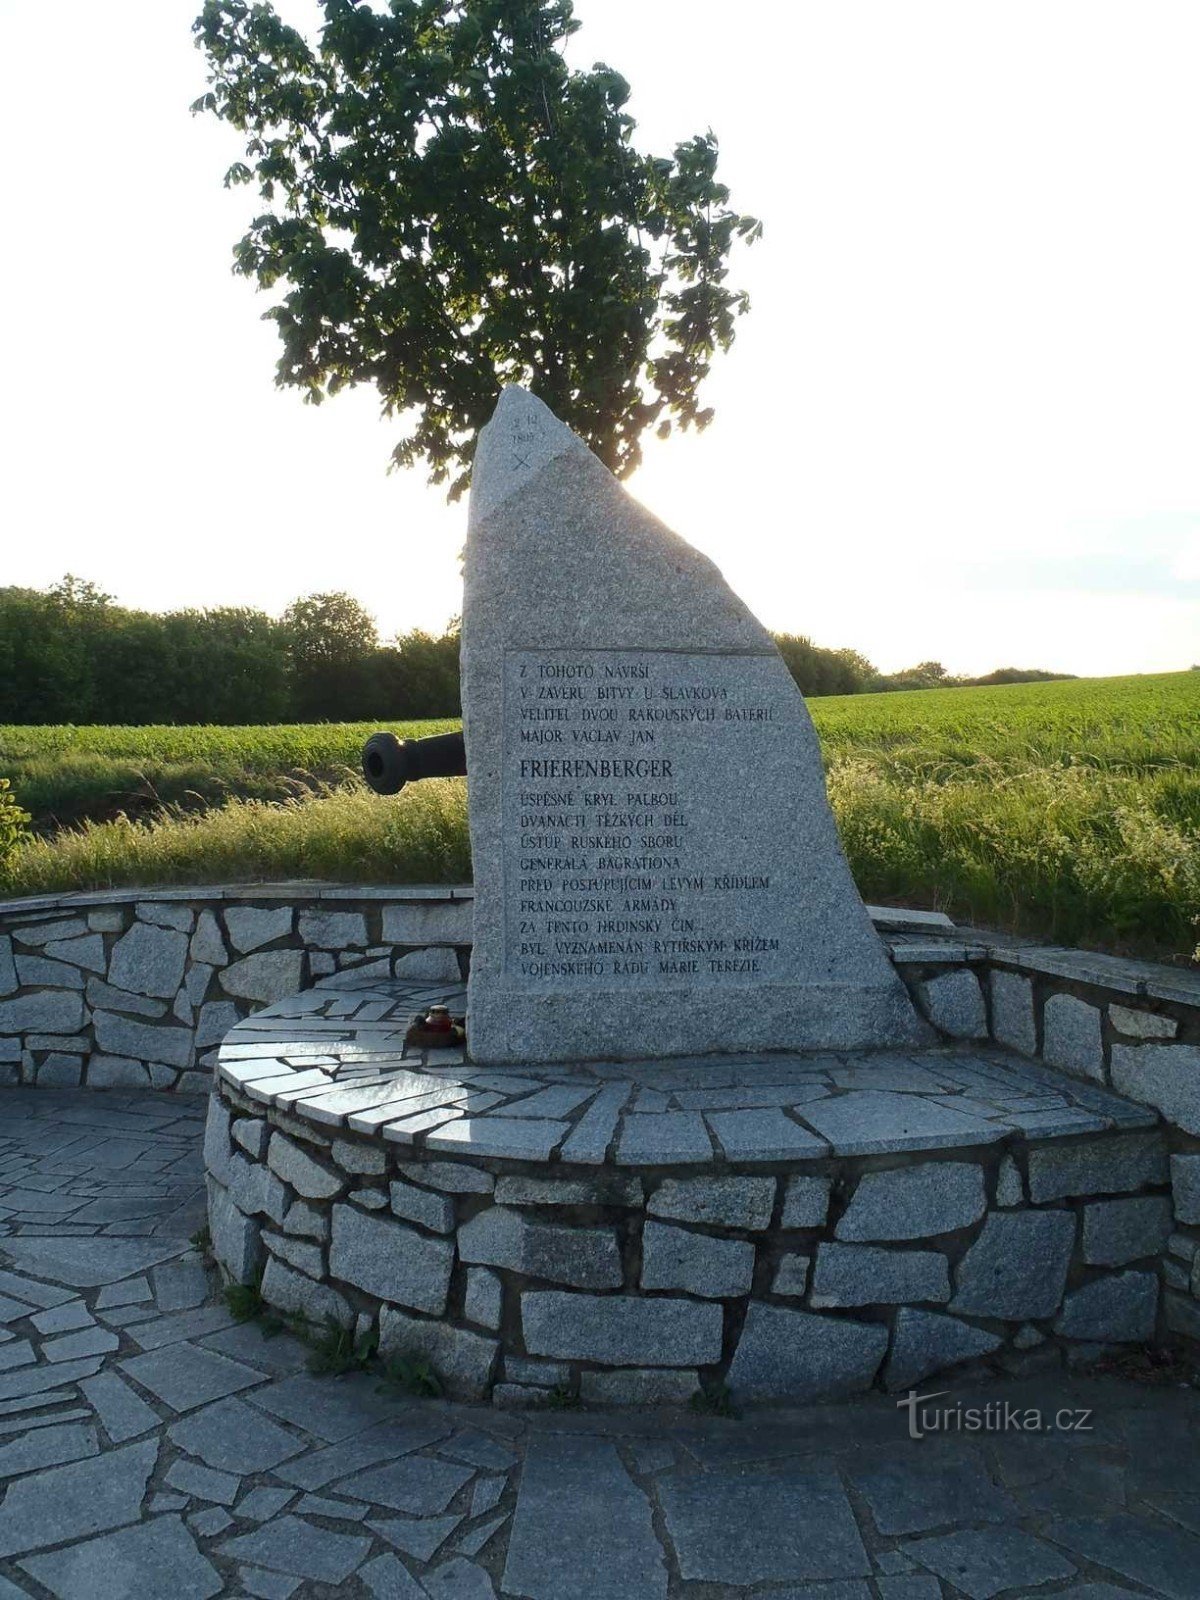 Monument till österrikiska artillerister - 25.5.2012/XNUMX/XNUMX